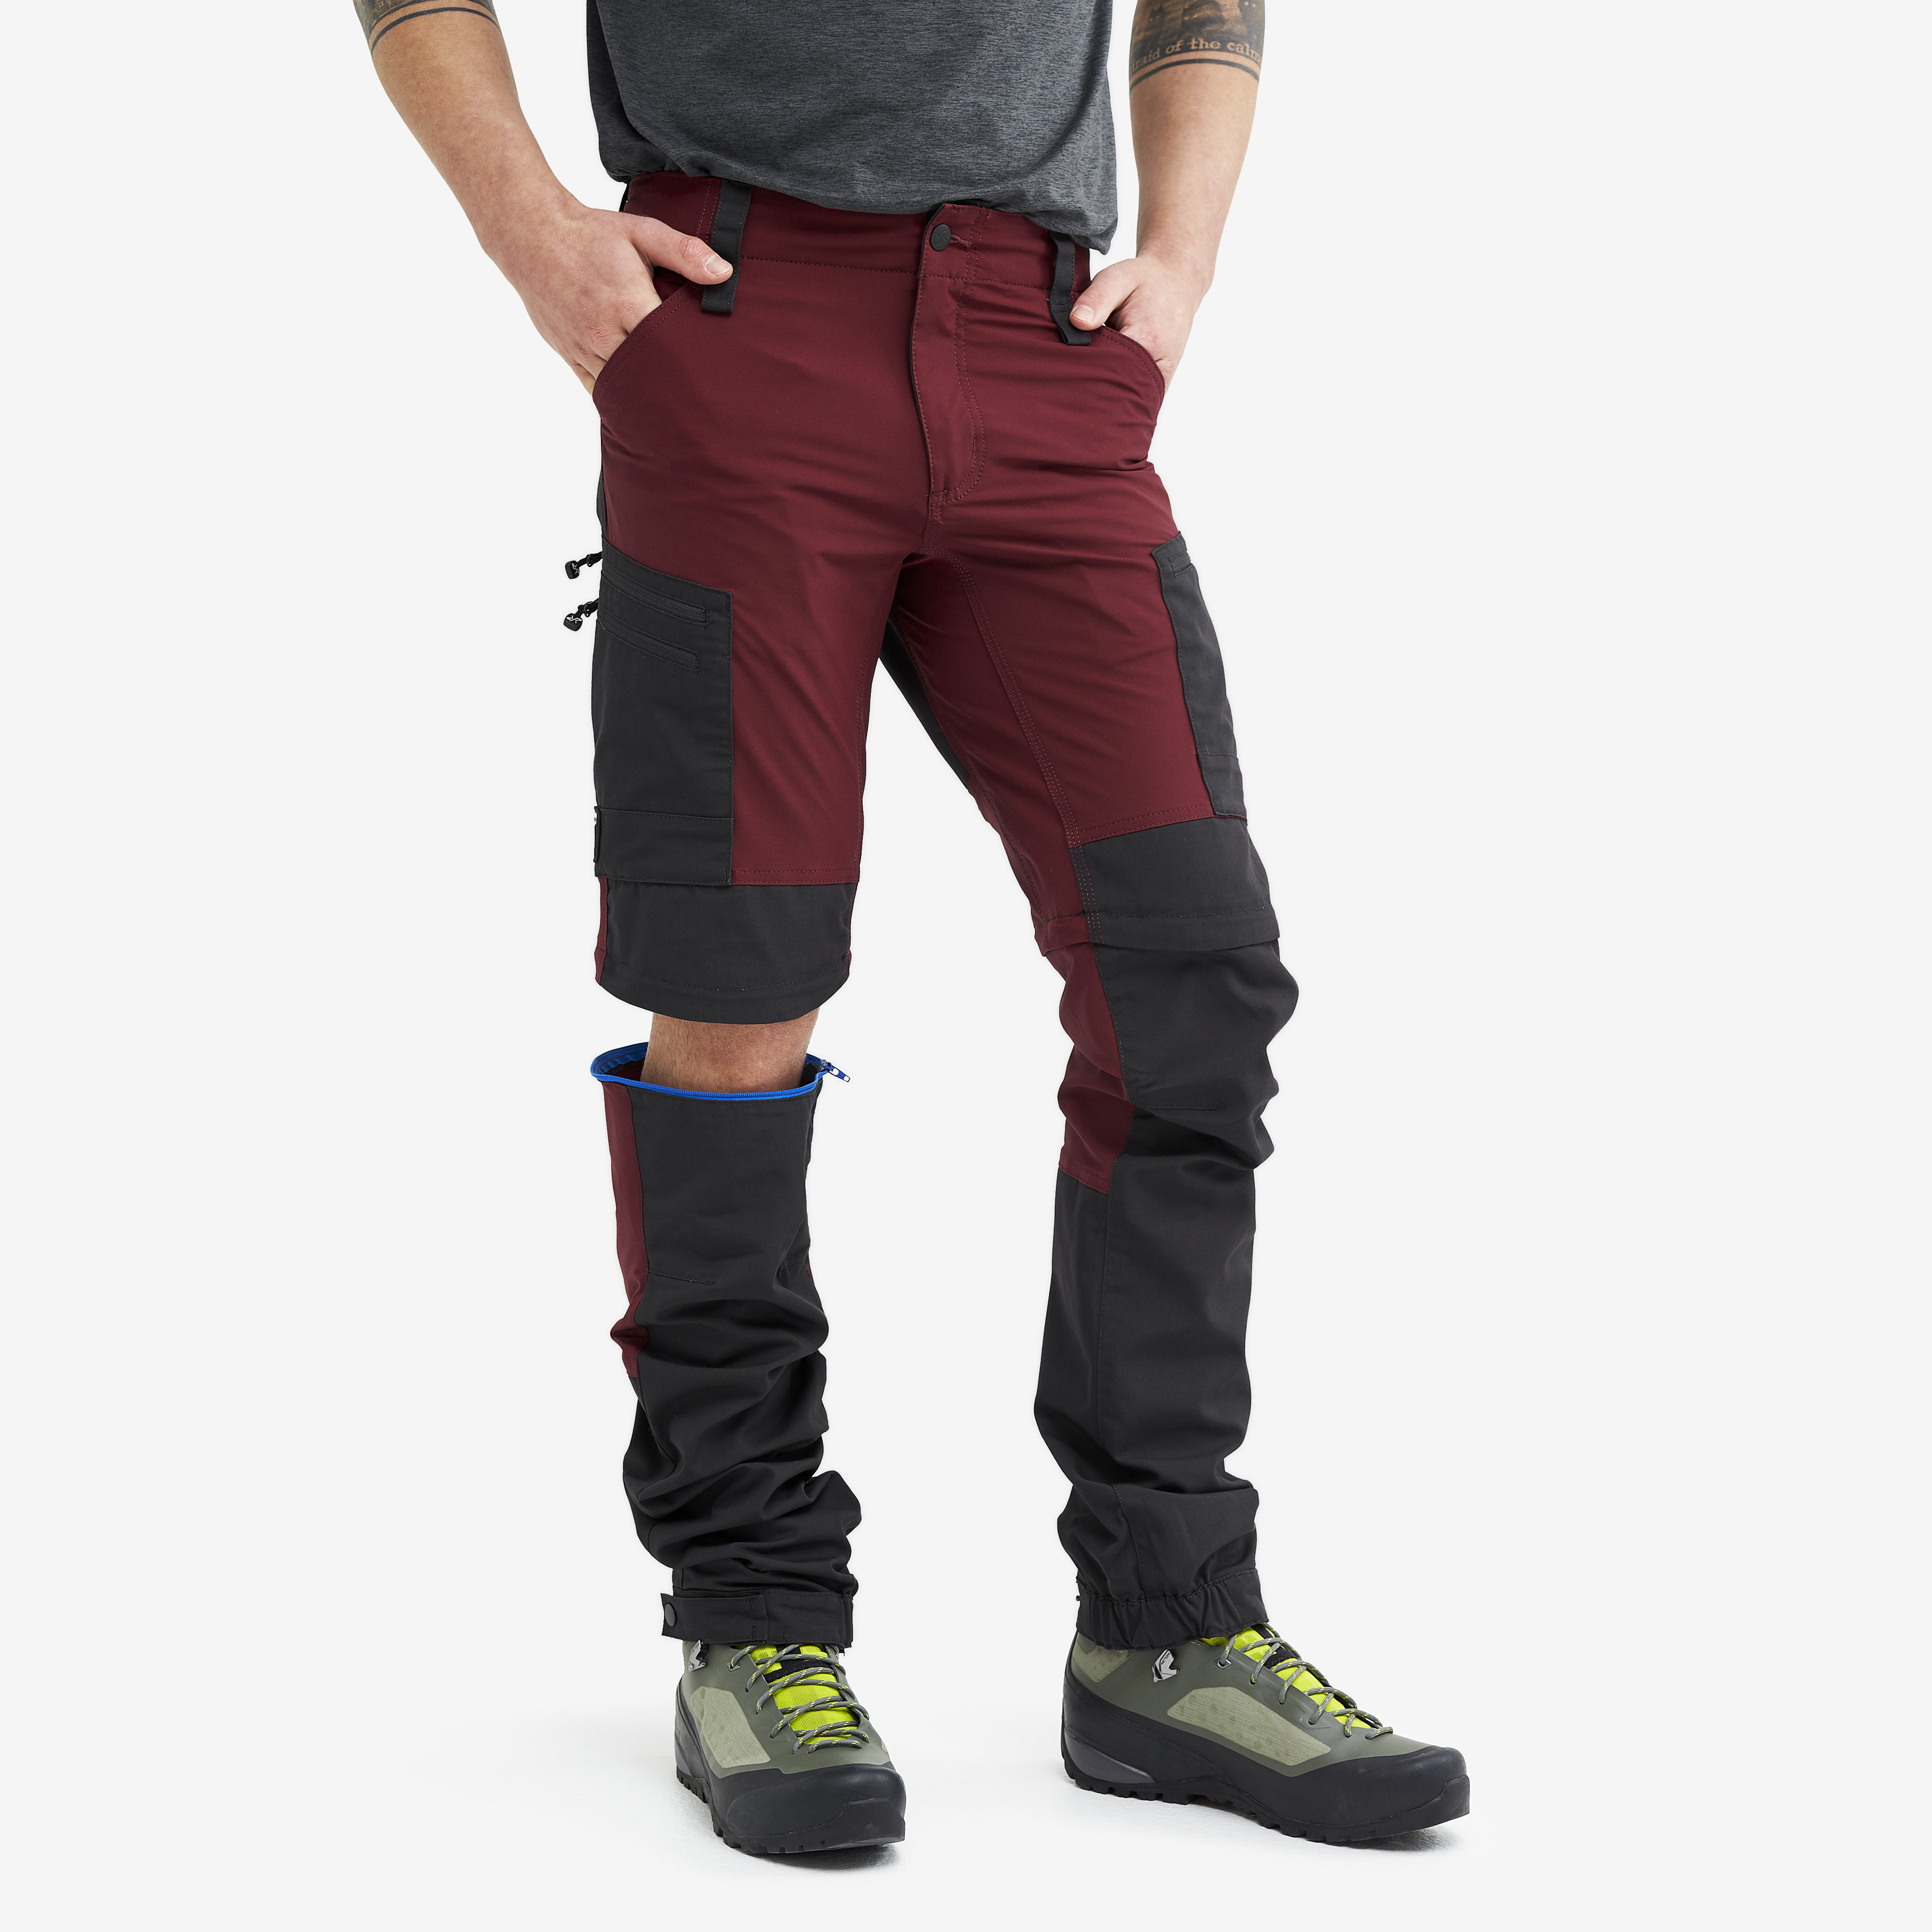 RVRC GP Pro Zip-off spodnie trekkingowe męskie bordowe